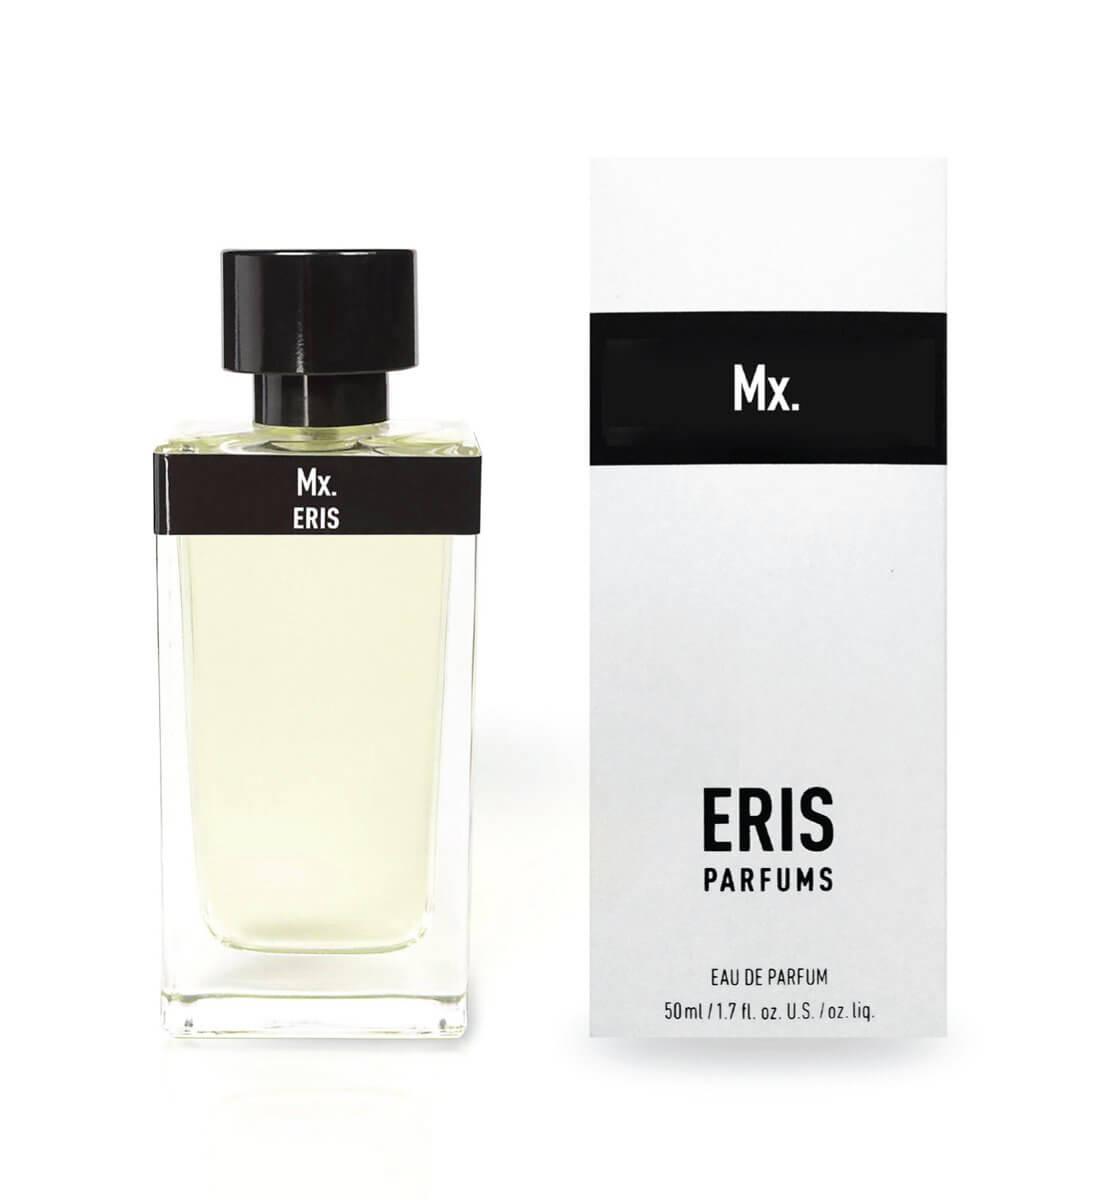 Mx. by Eris Parfums at Indigo Perfumery